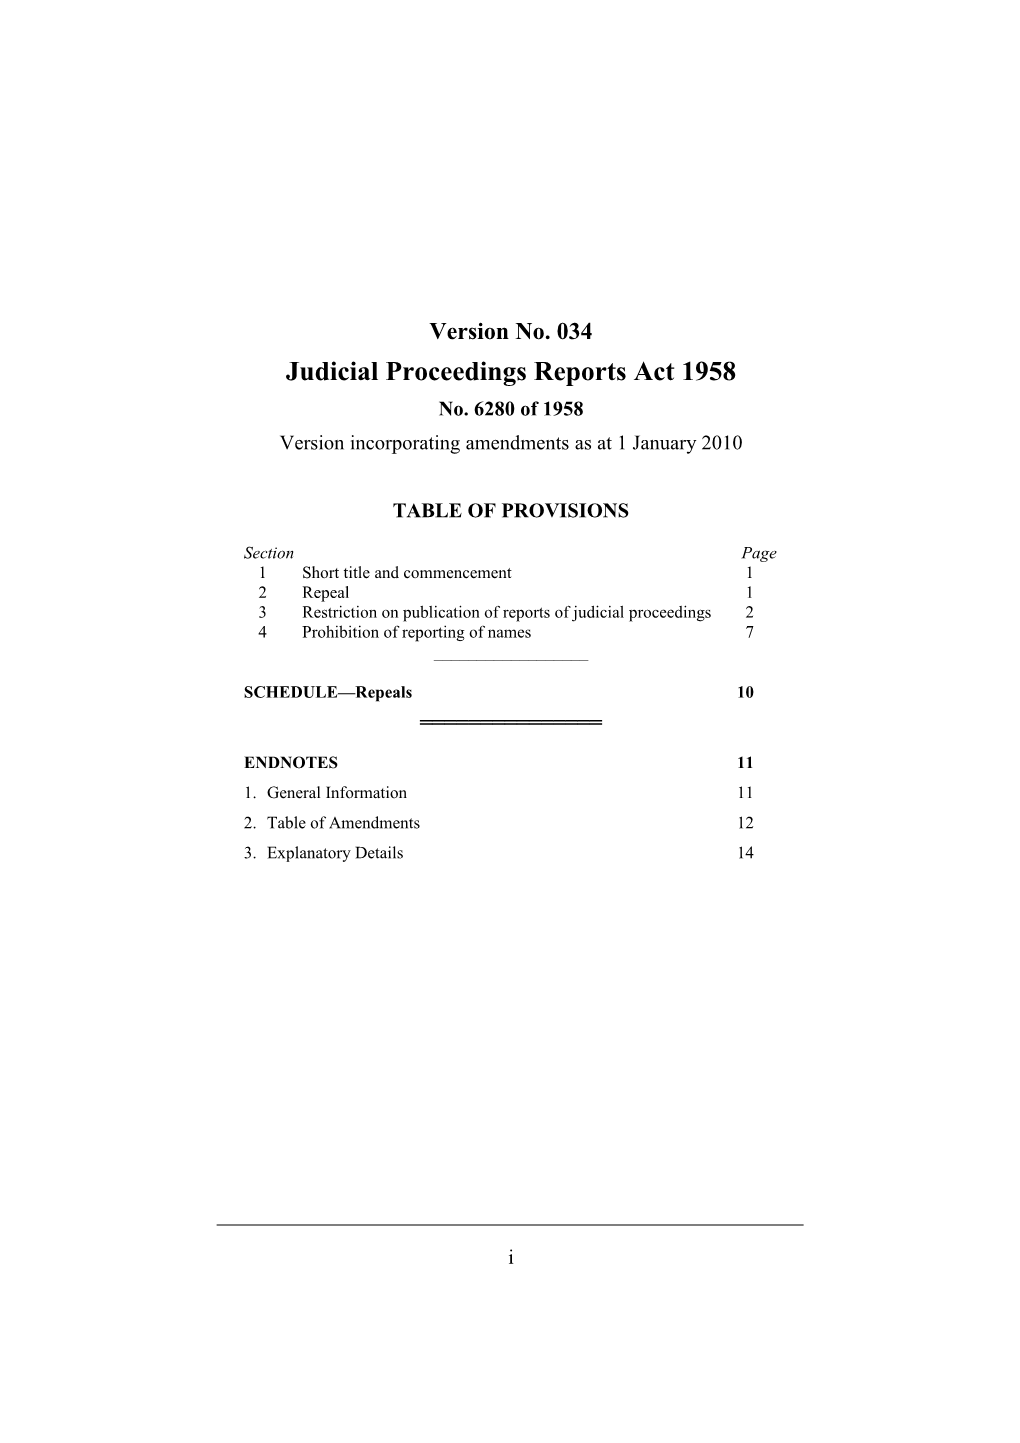 Judicial Proceedings Reports Act 1958